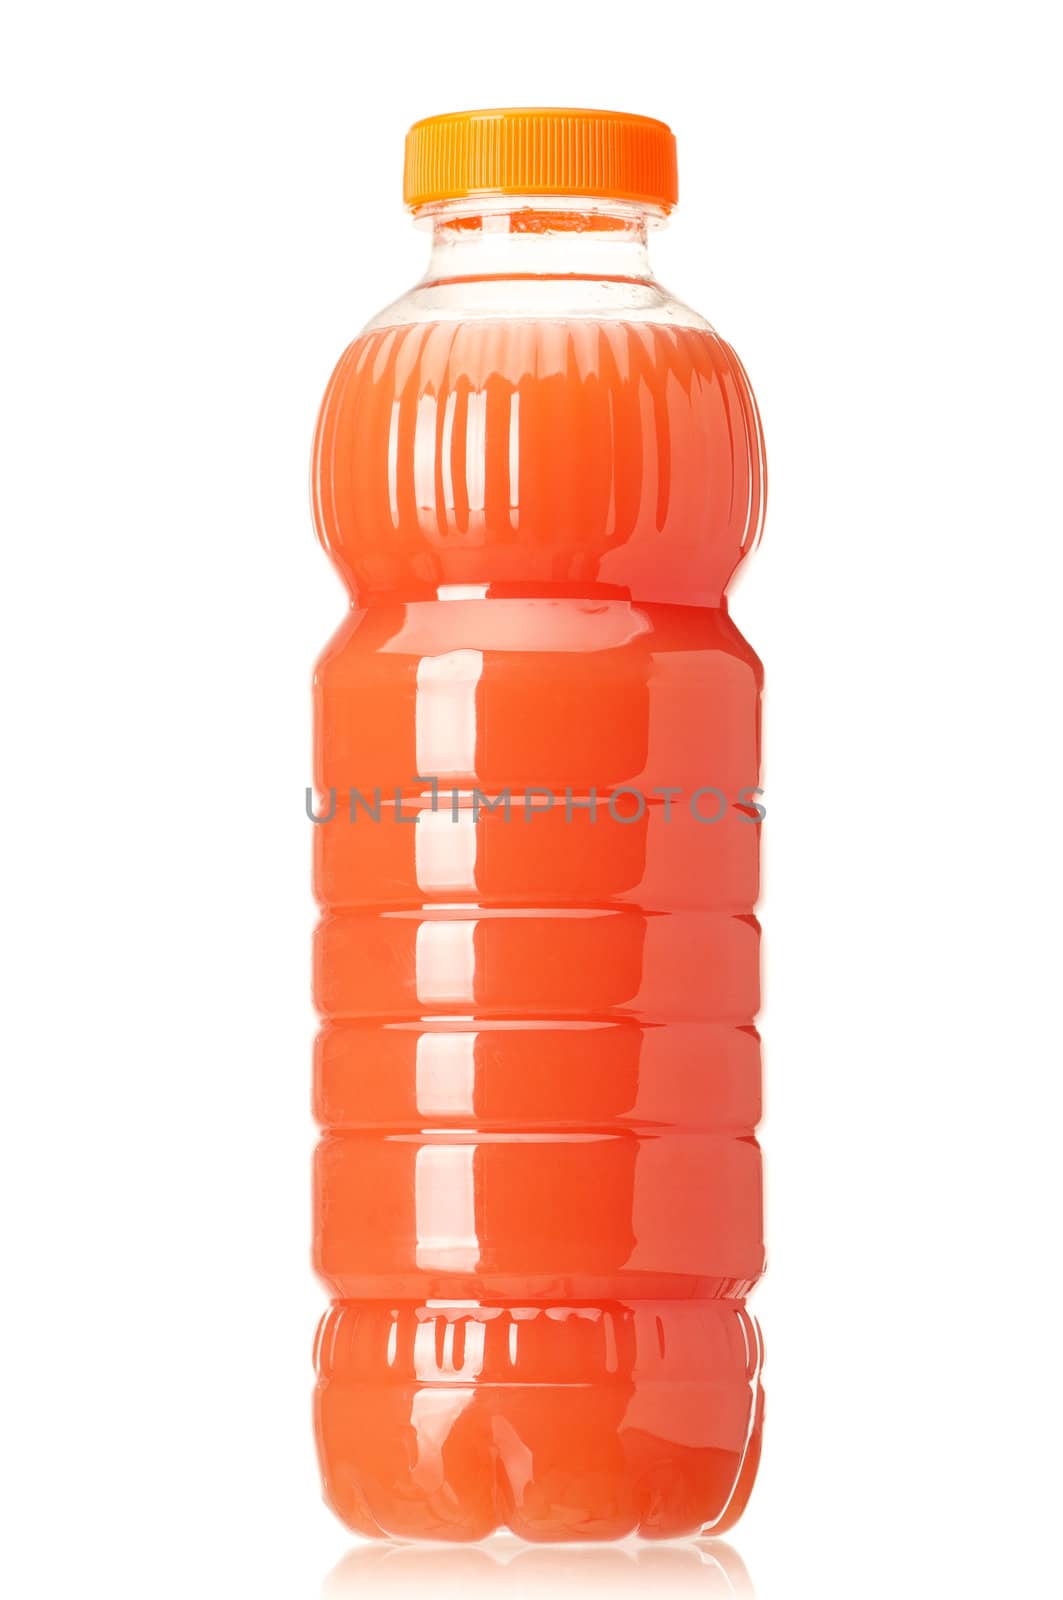 Grapefruit juice in plastic bottle on white background